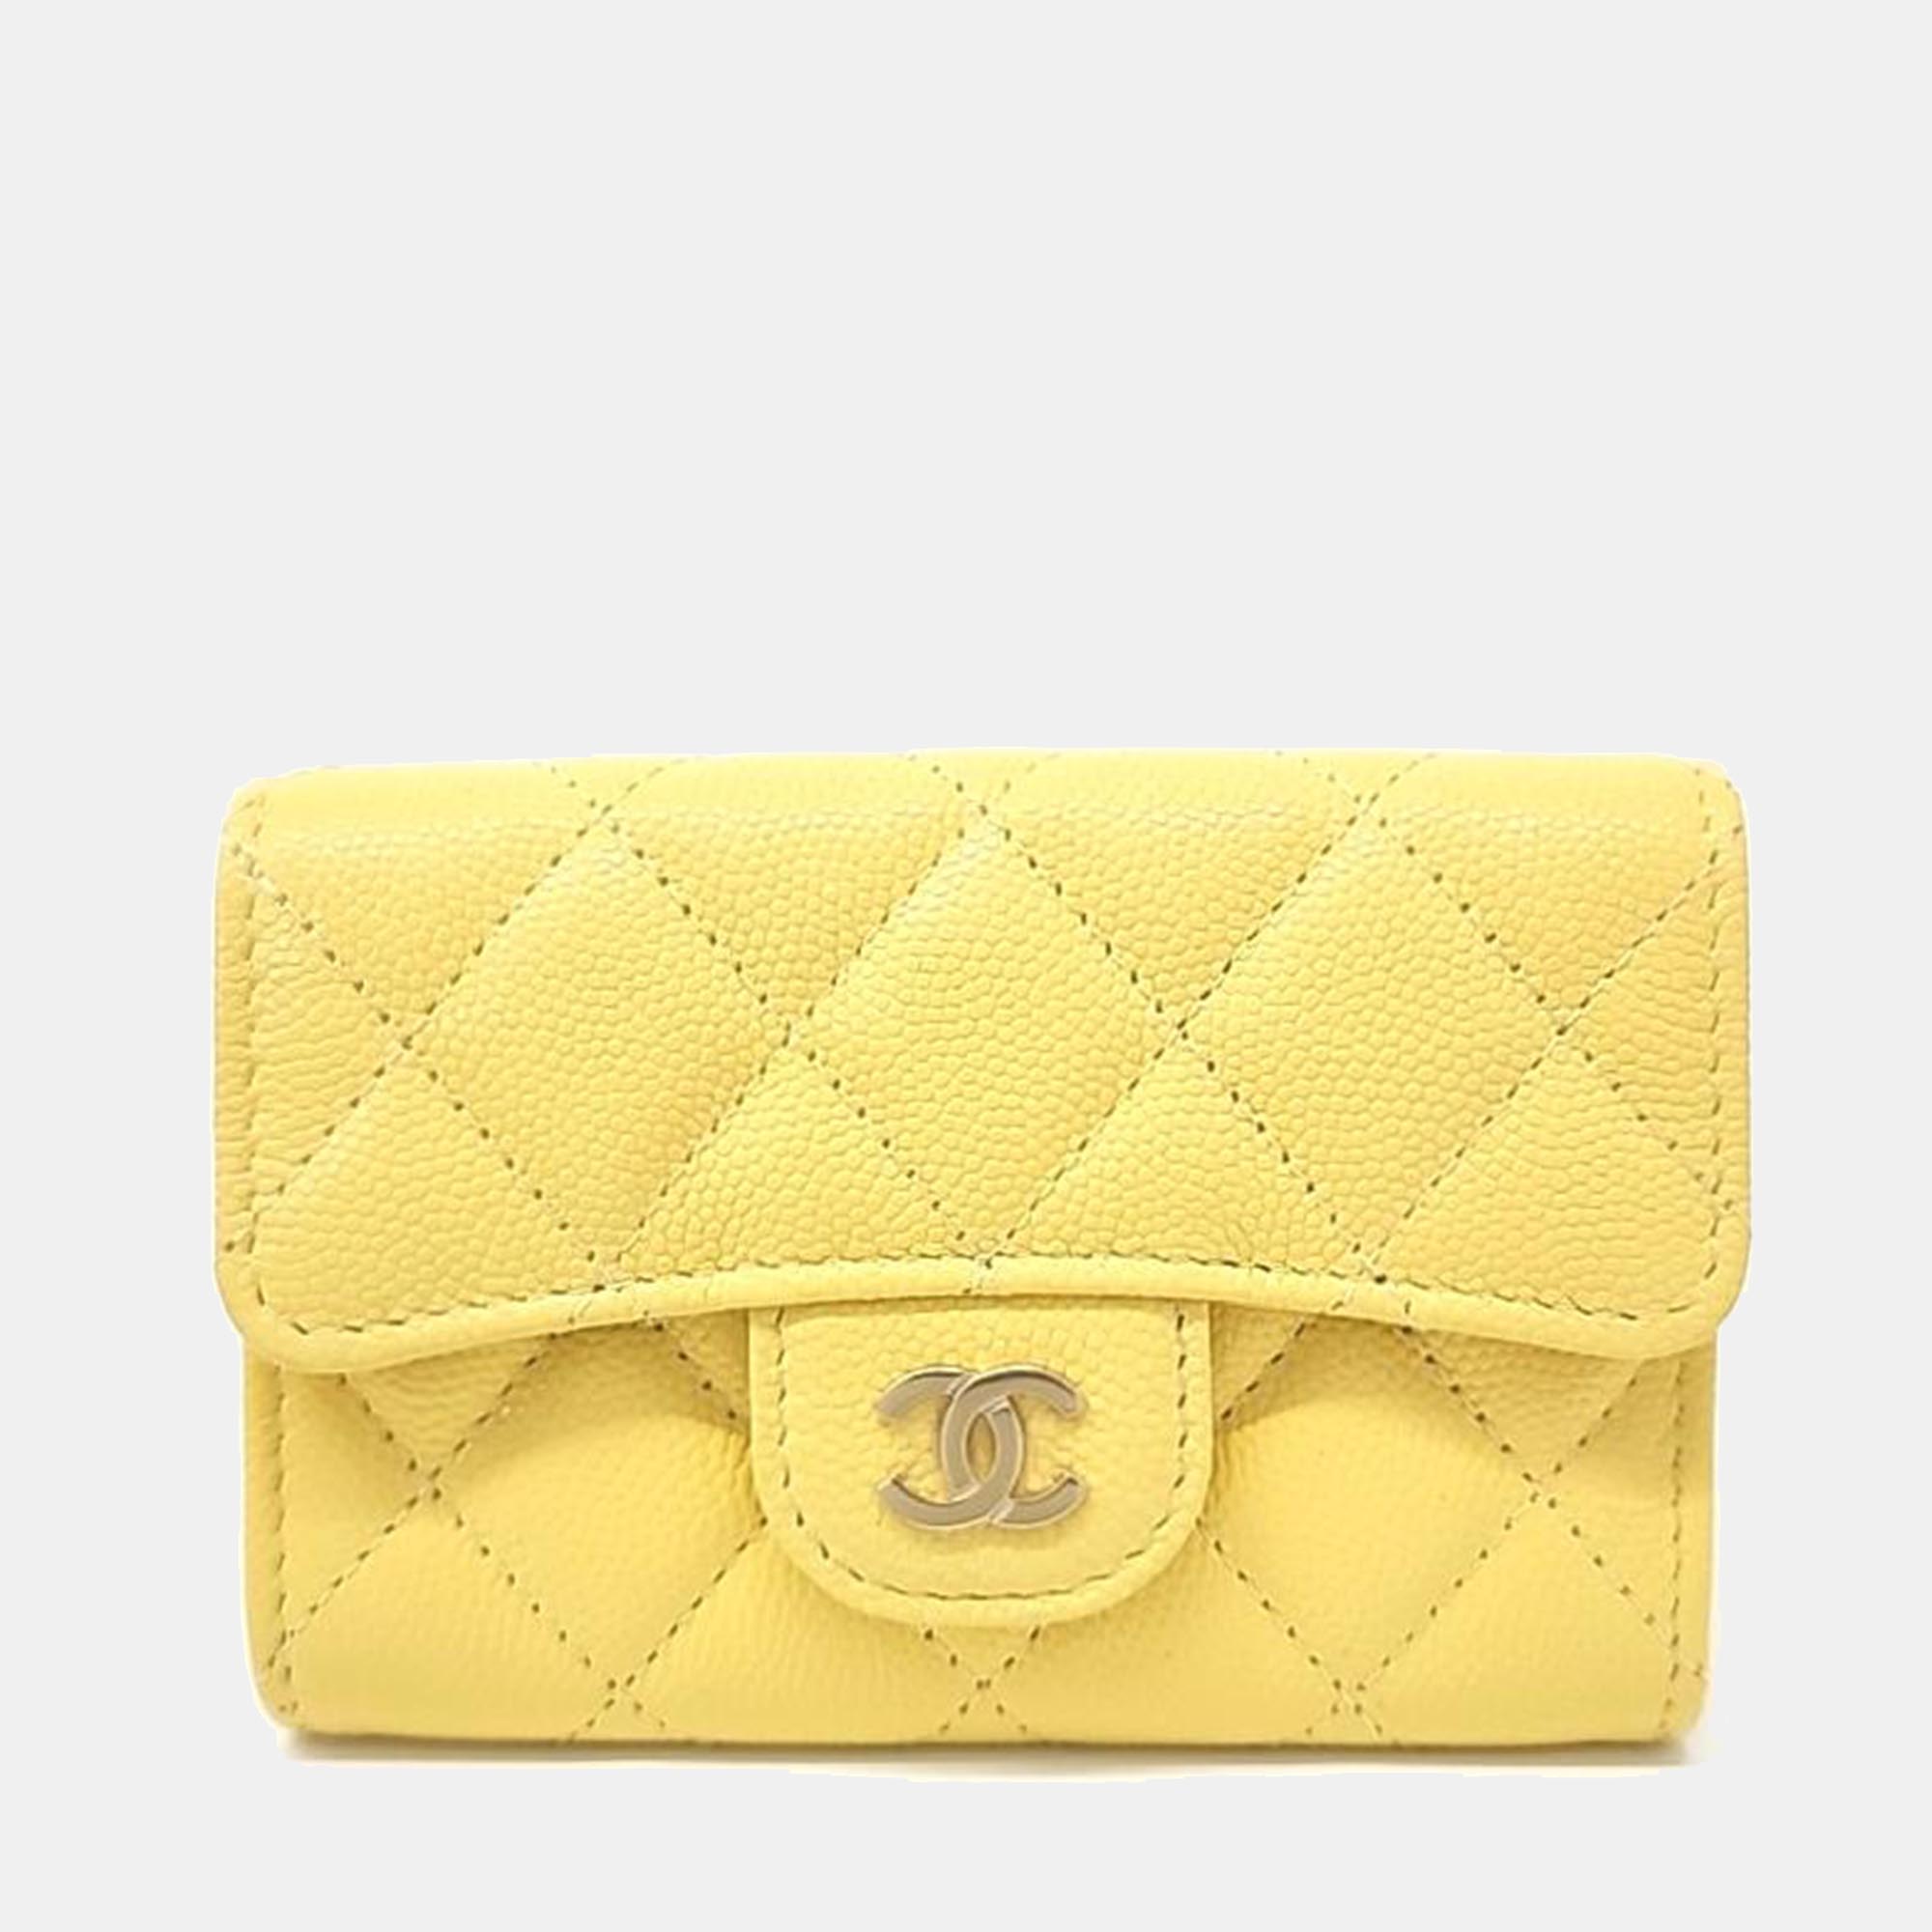 Chanel caviar yellow card wallet